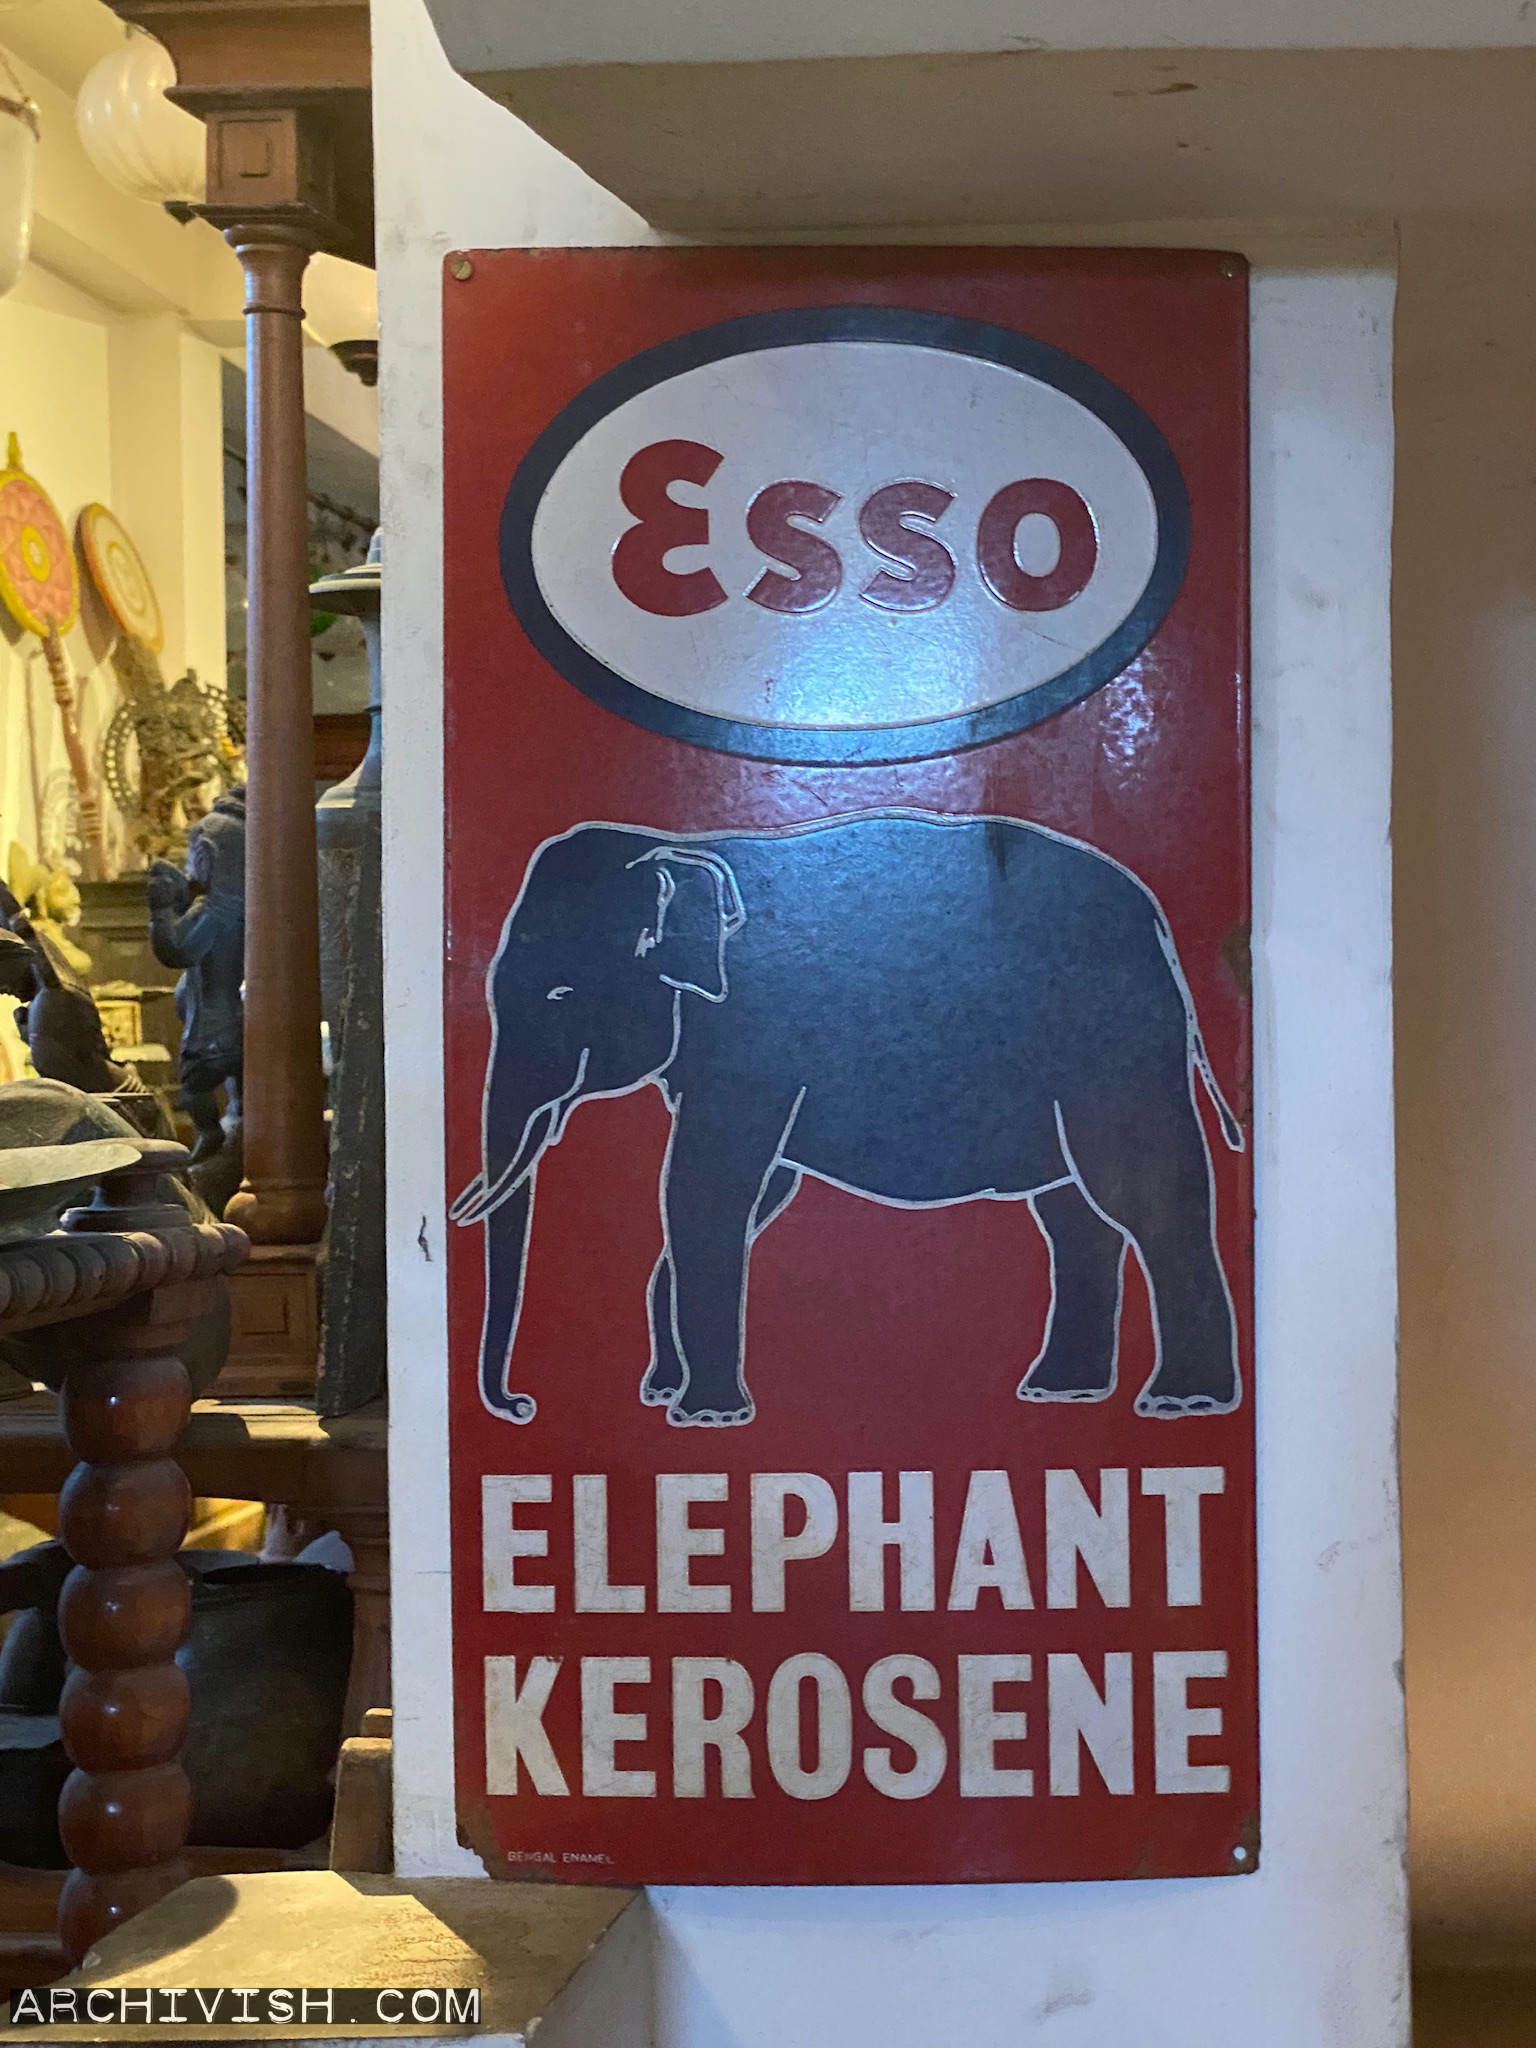 Esso Elephant Kerosene - Sri Lanka 2020